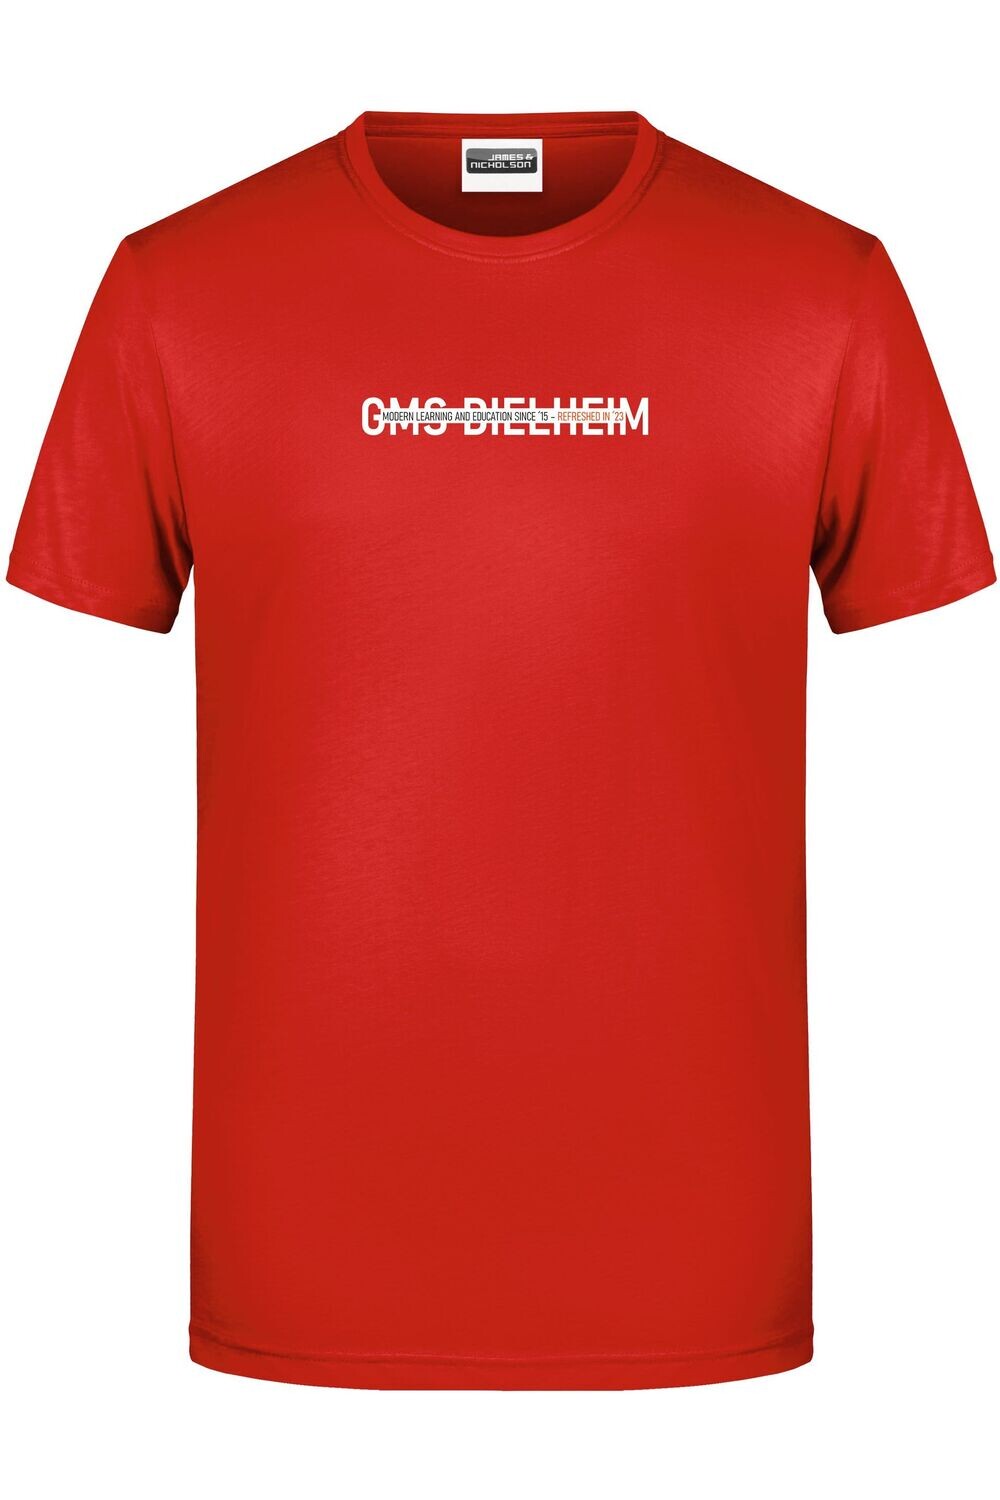 GMS Dielheim Kinder Bio-Baumwoll-Shirts